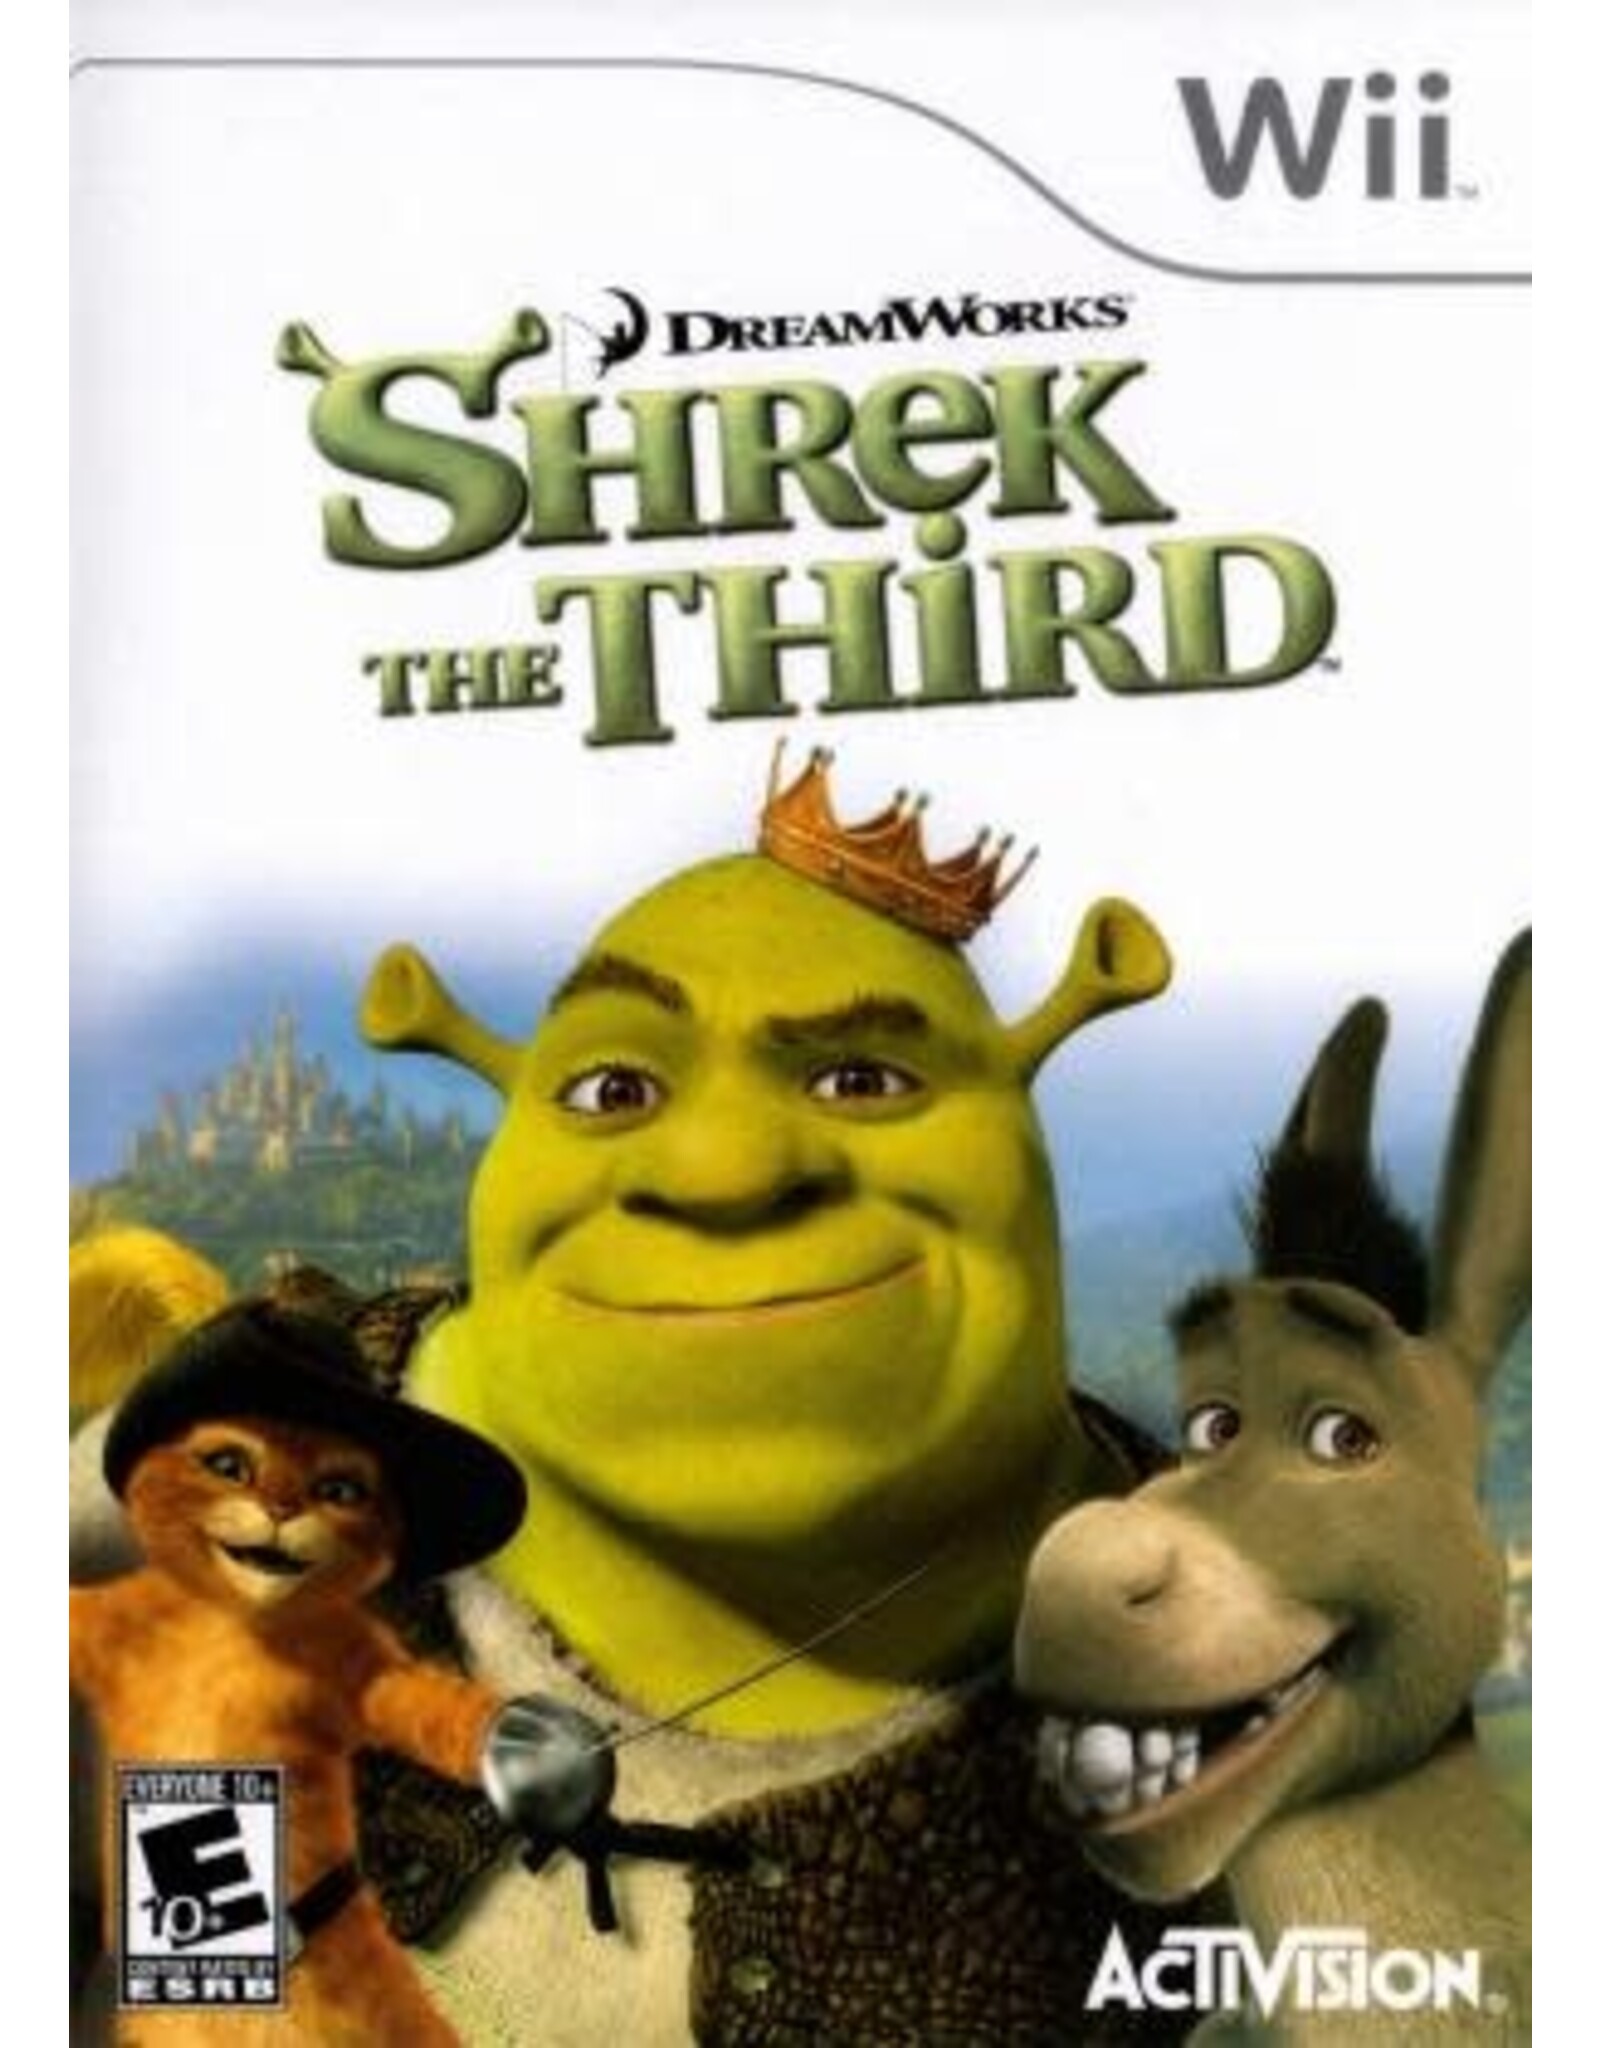 Wii Shrek the Third (Used)